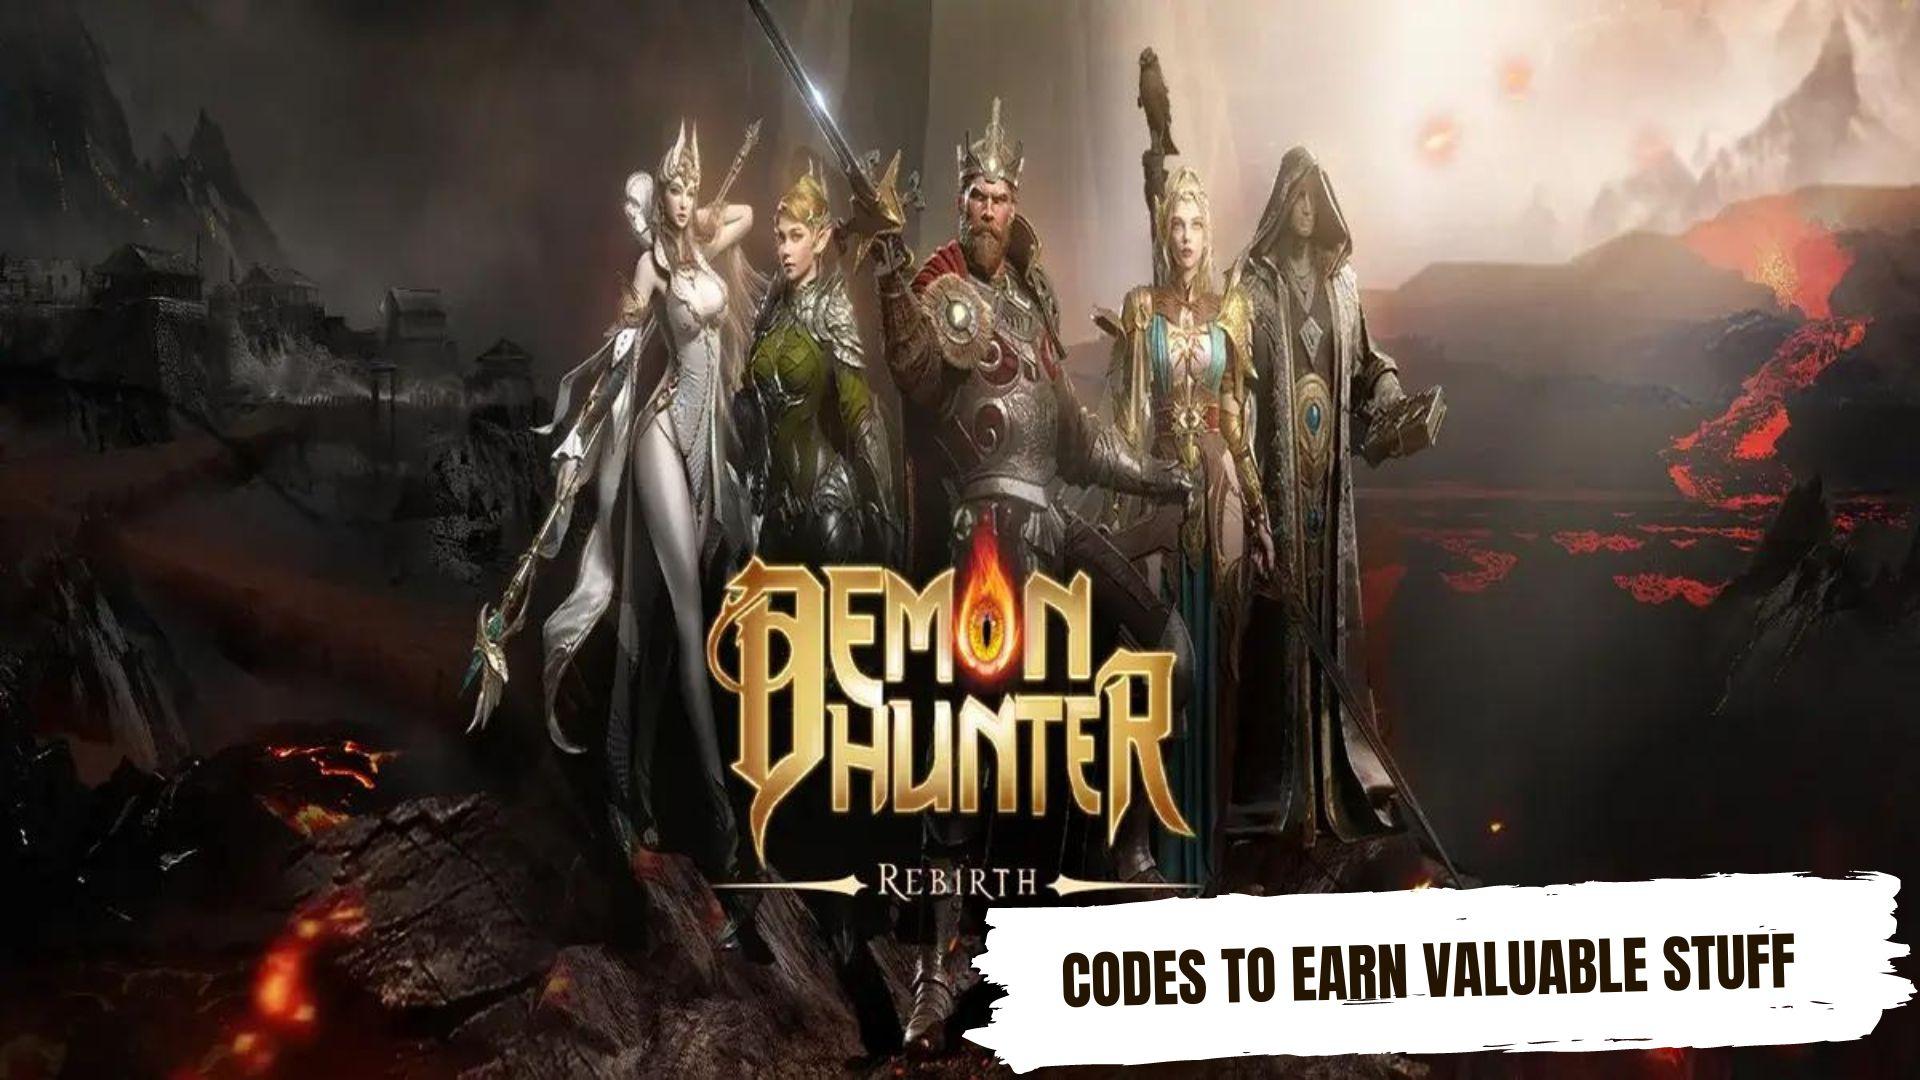 DemonHunterRebirth #MMORPG - Demon Hunter: Rebirth